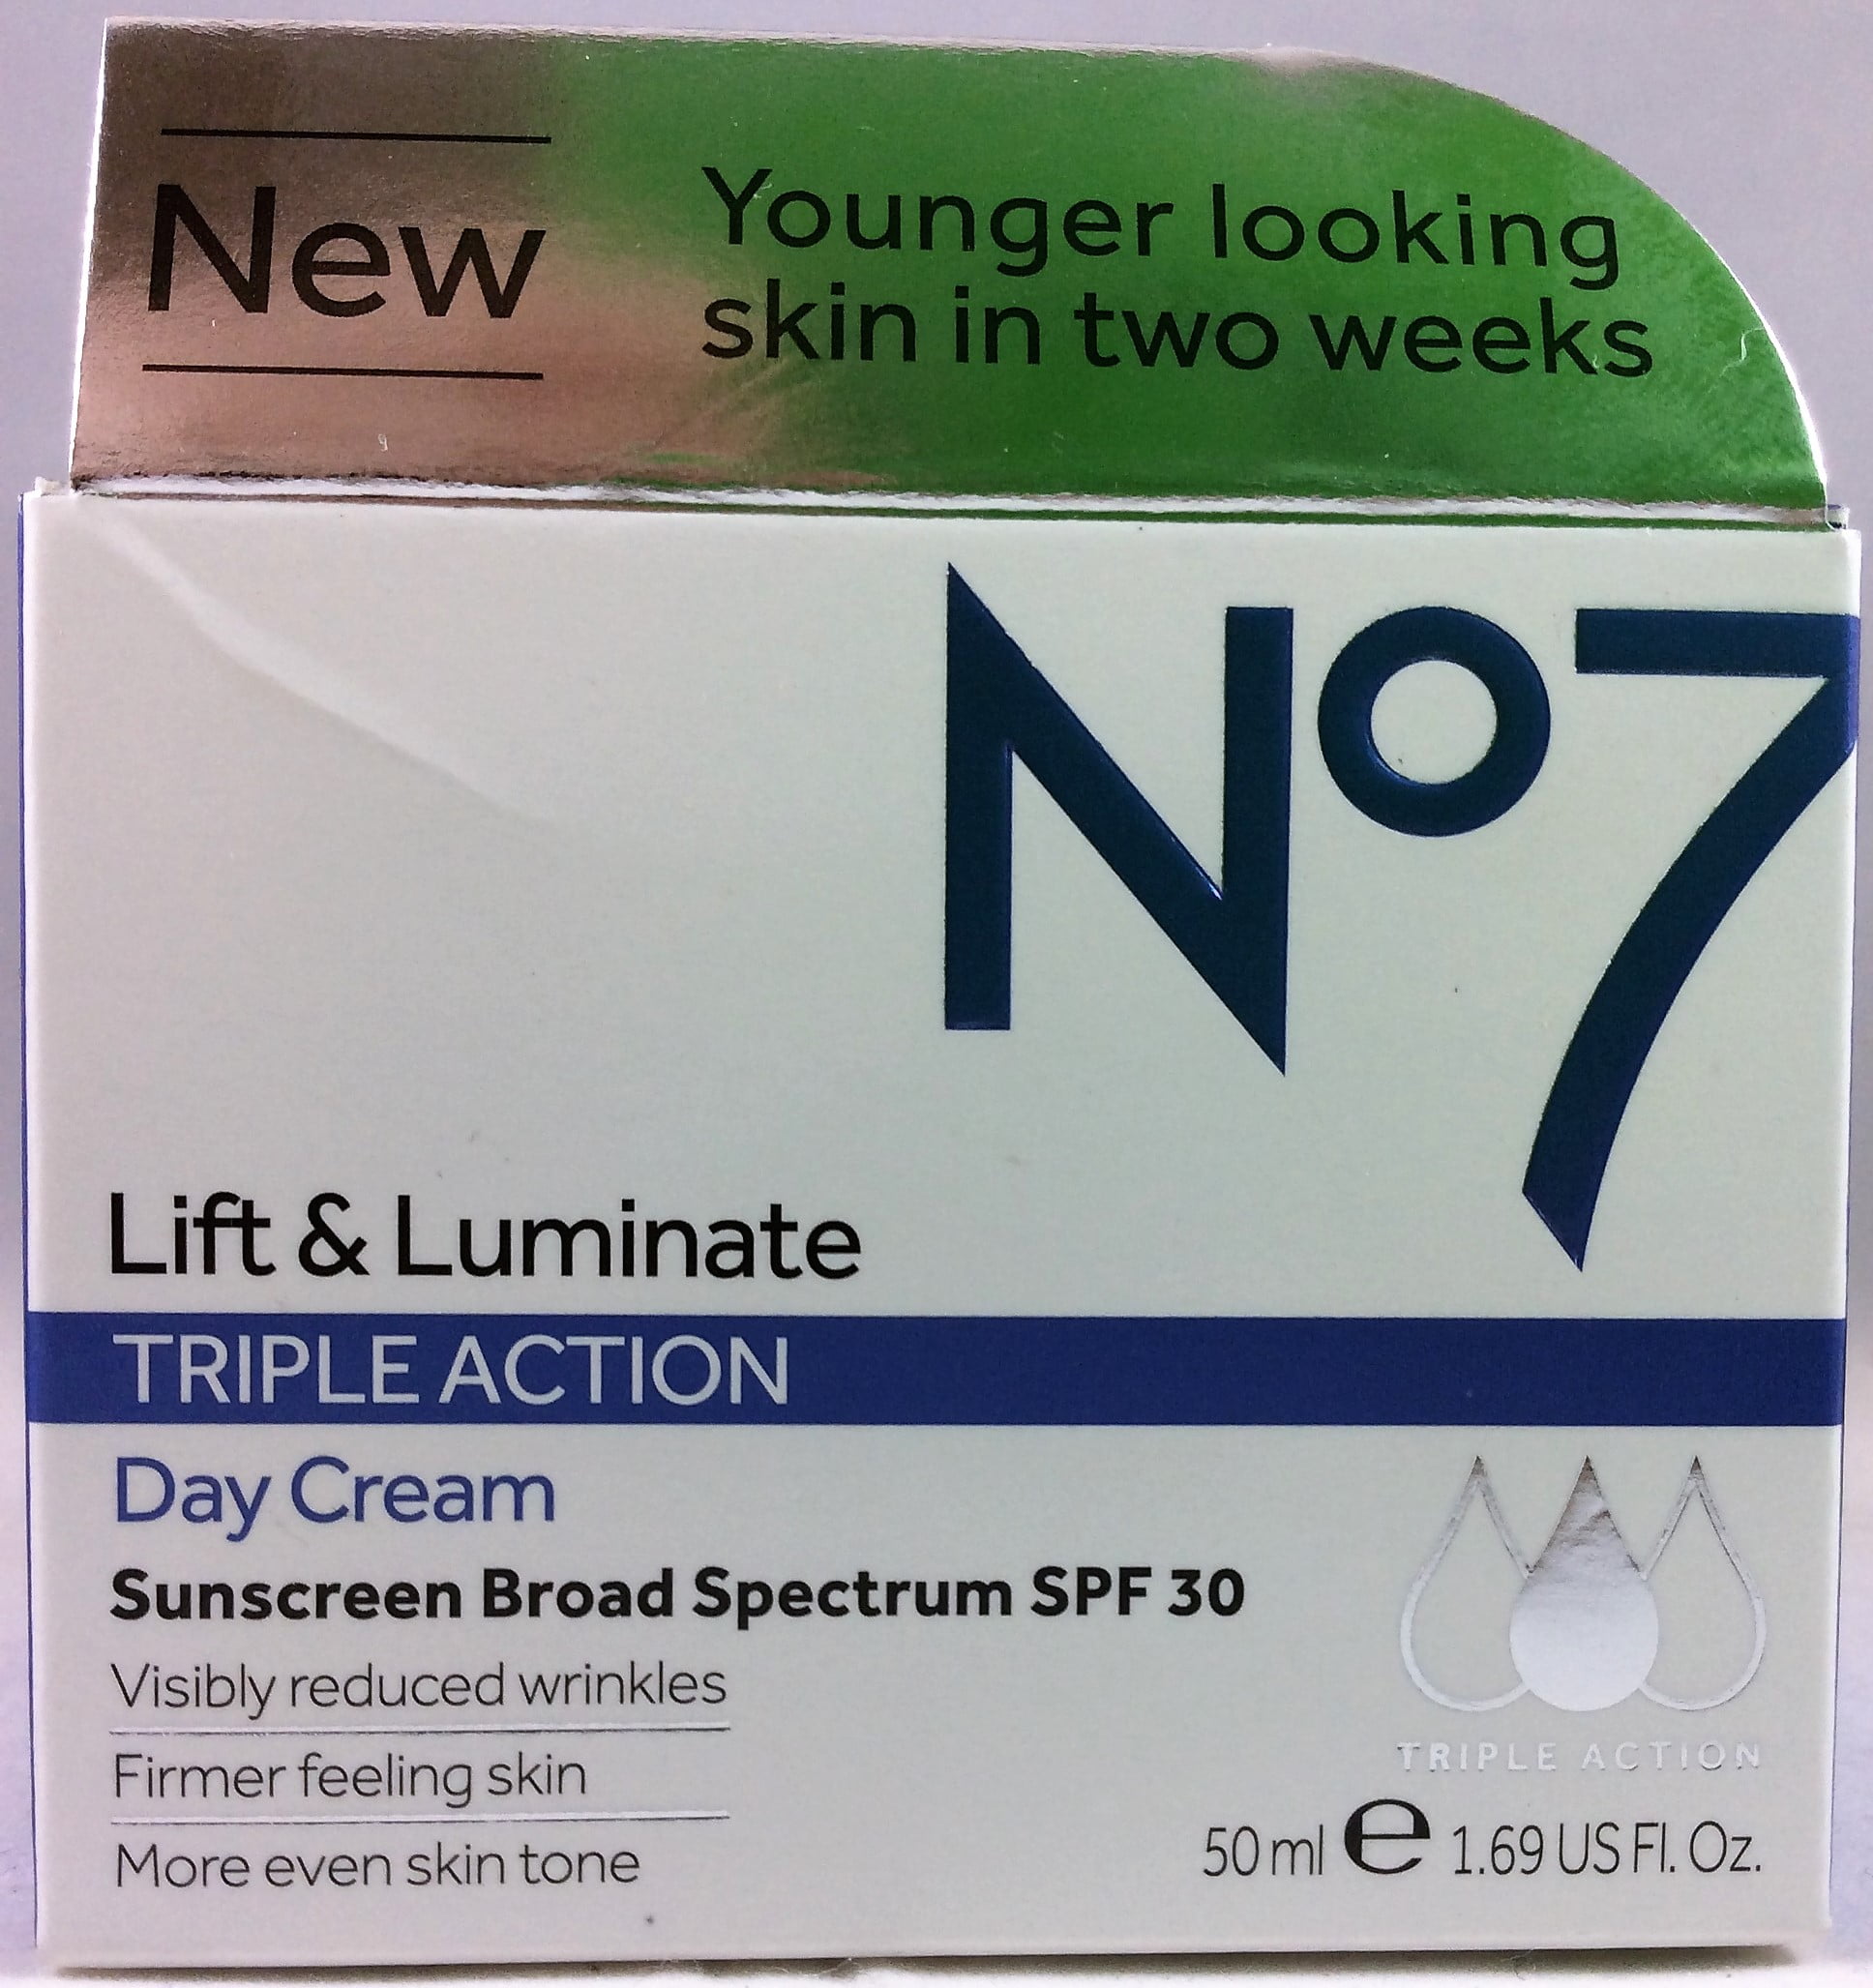  No7 Lift & Luminate TRIPLE ACTION Serum